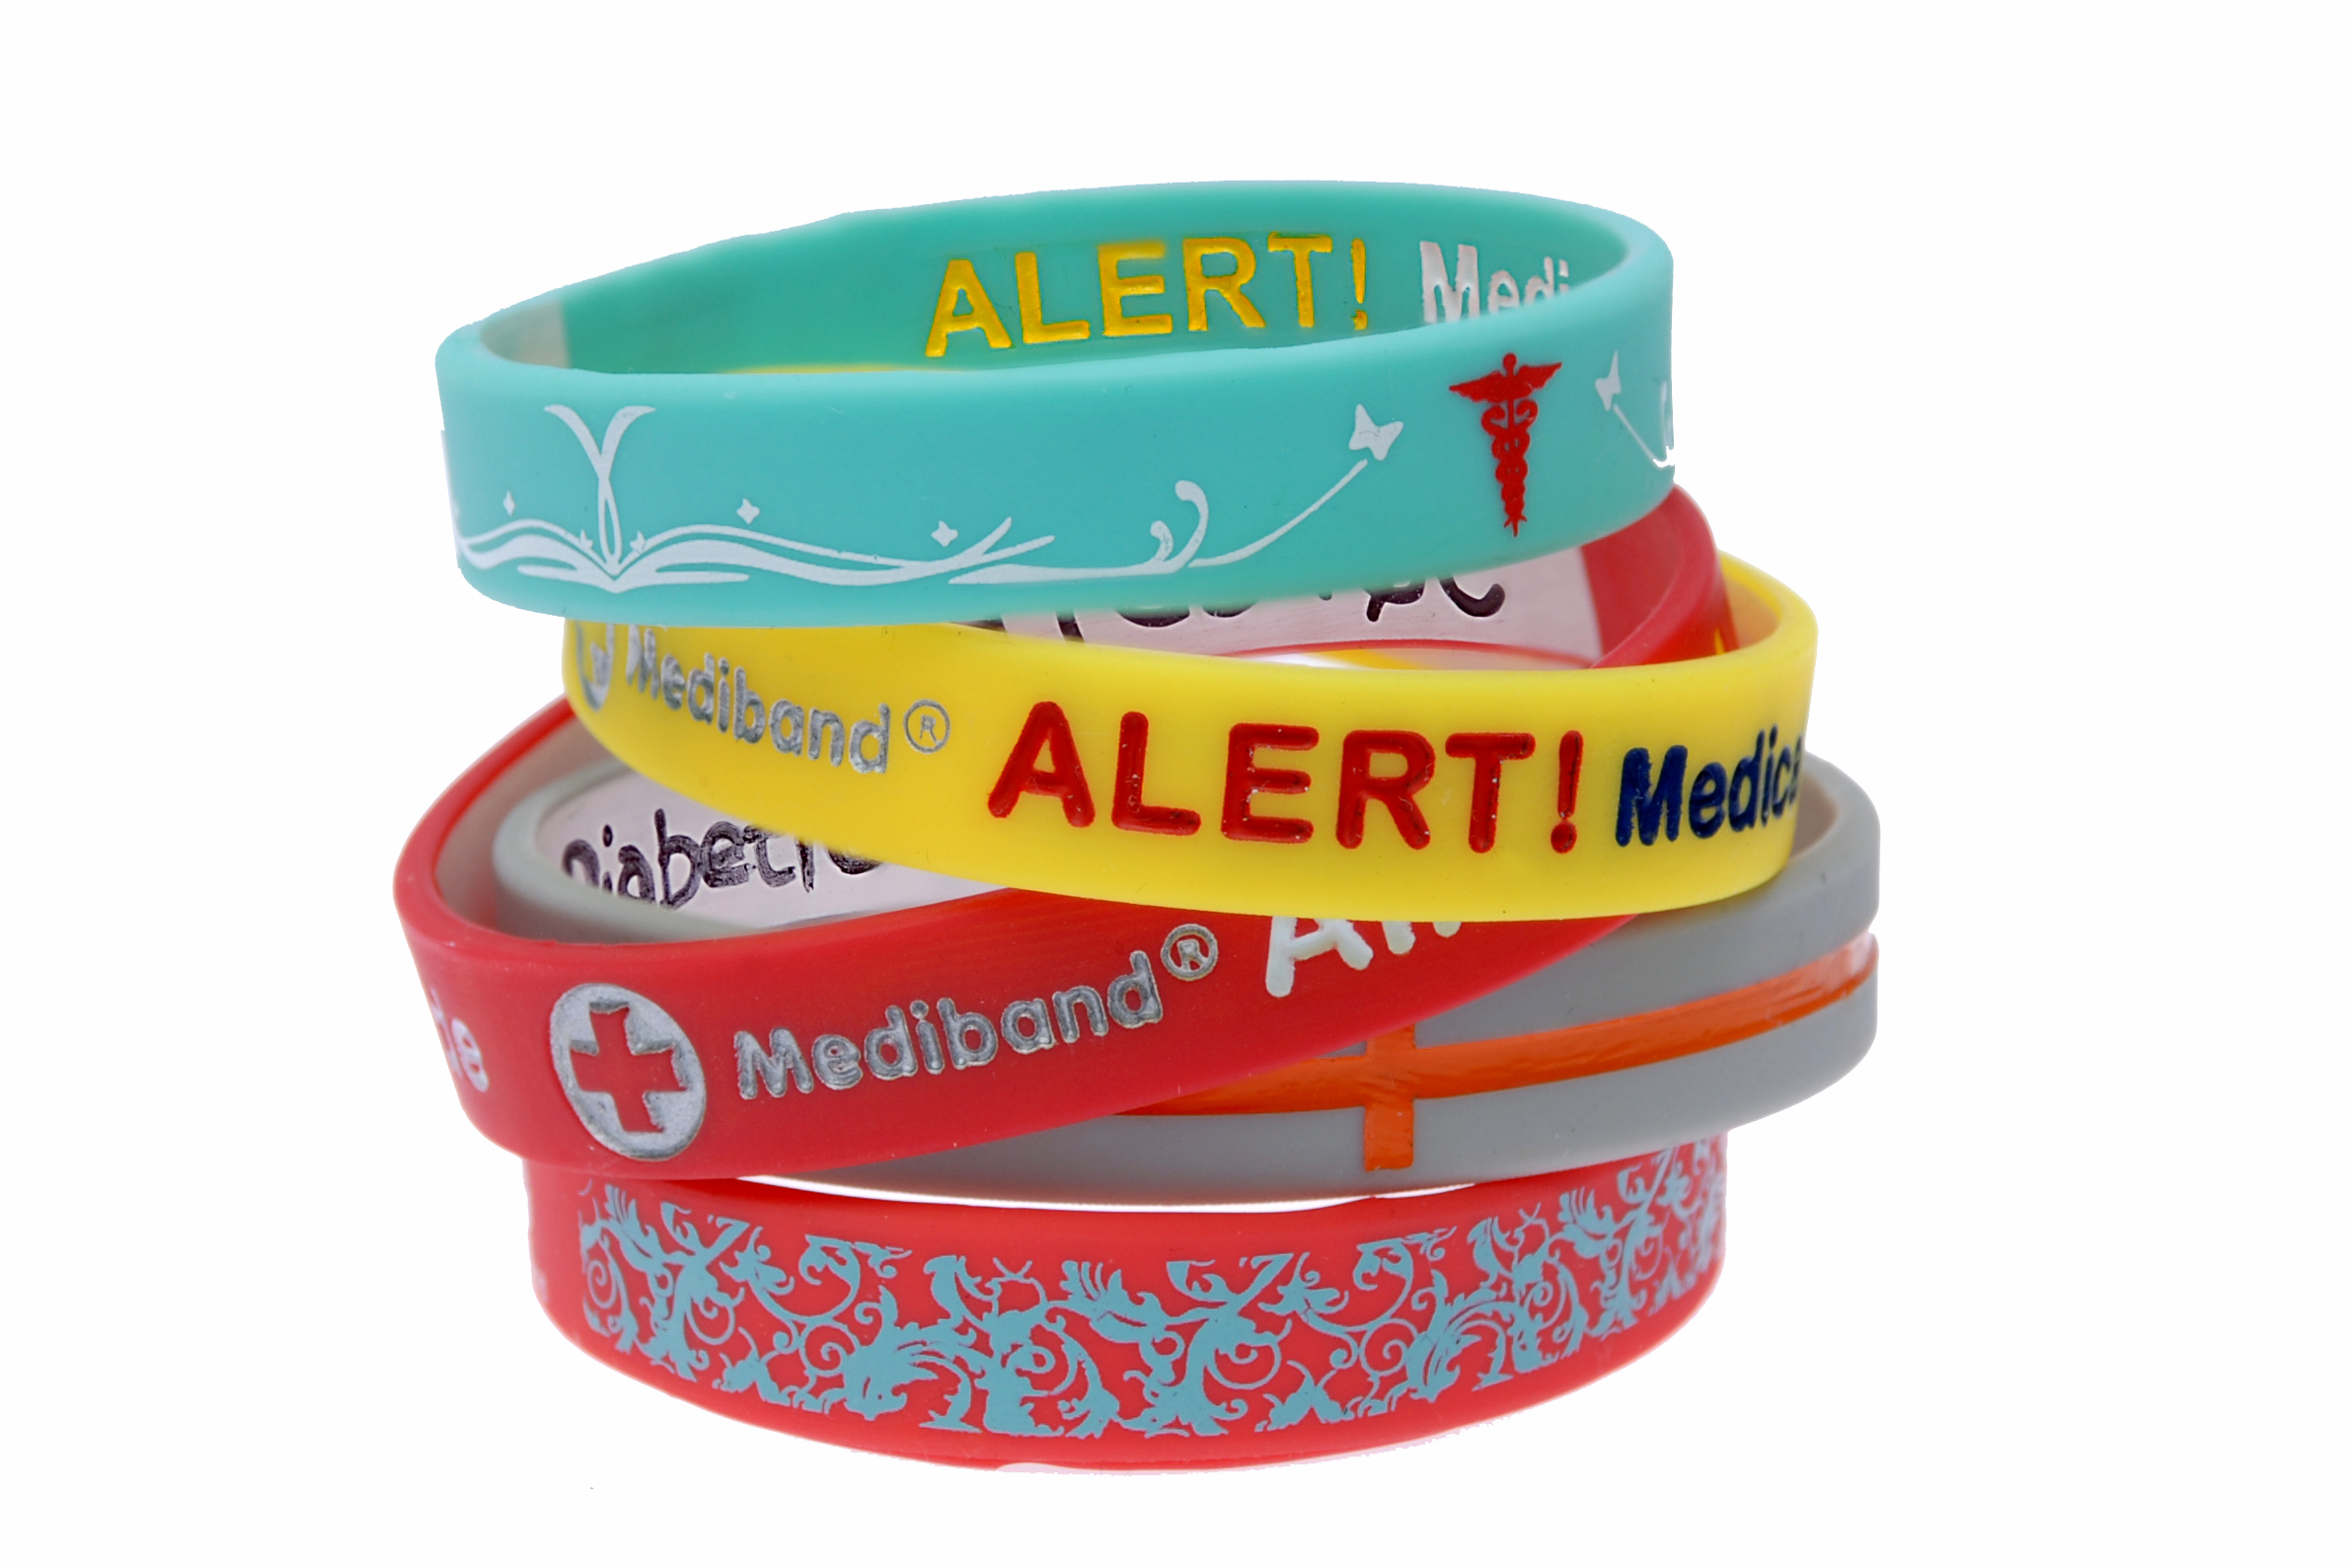 Penicillin Allergy Wristband – Mediband South Africa